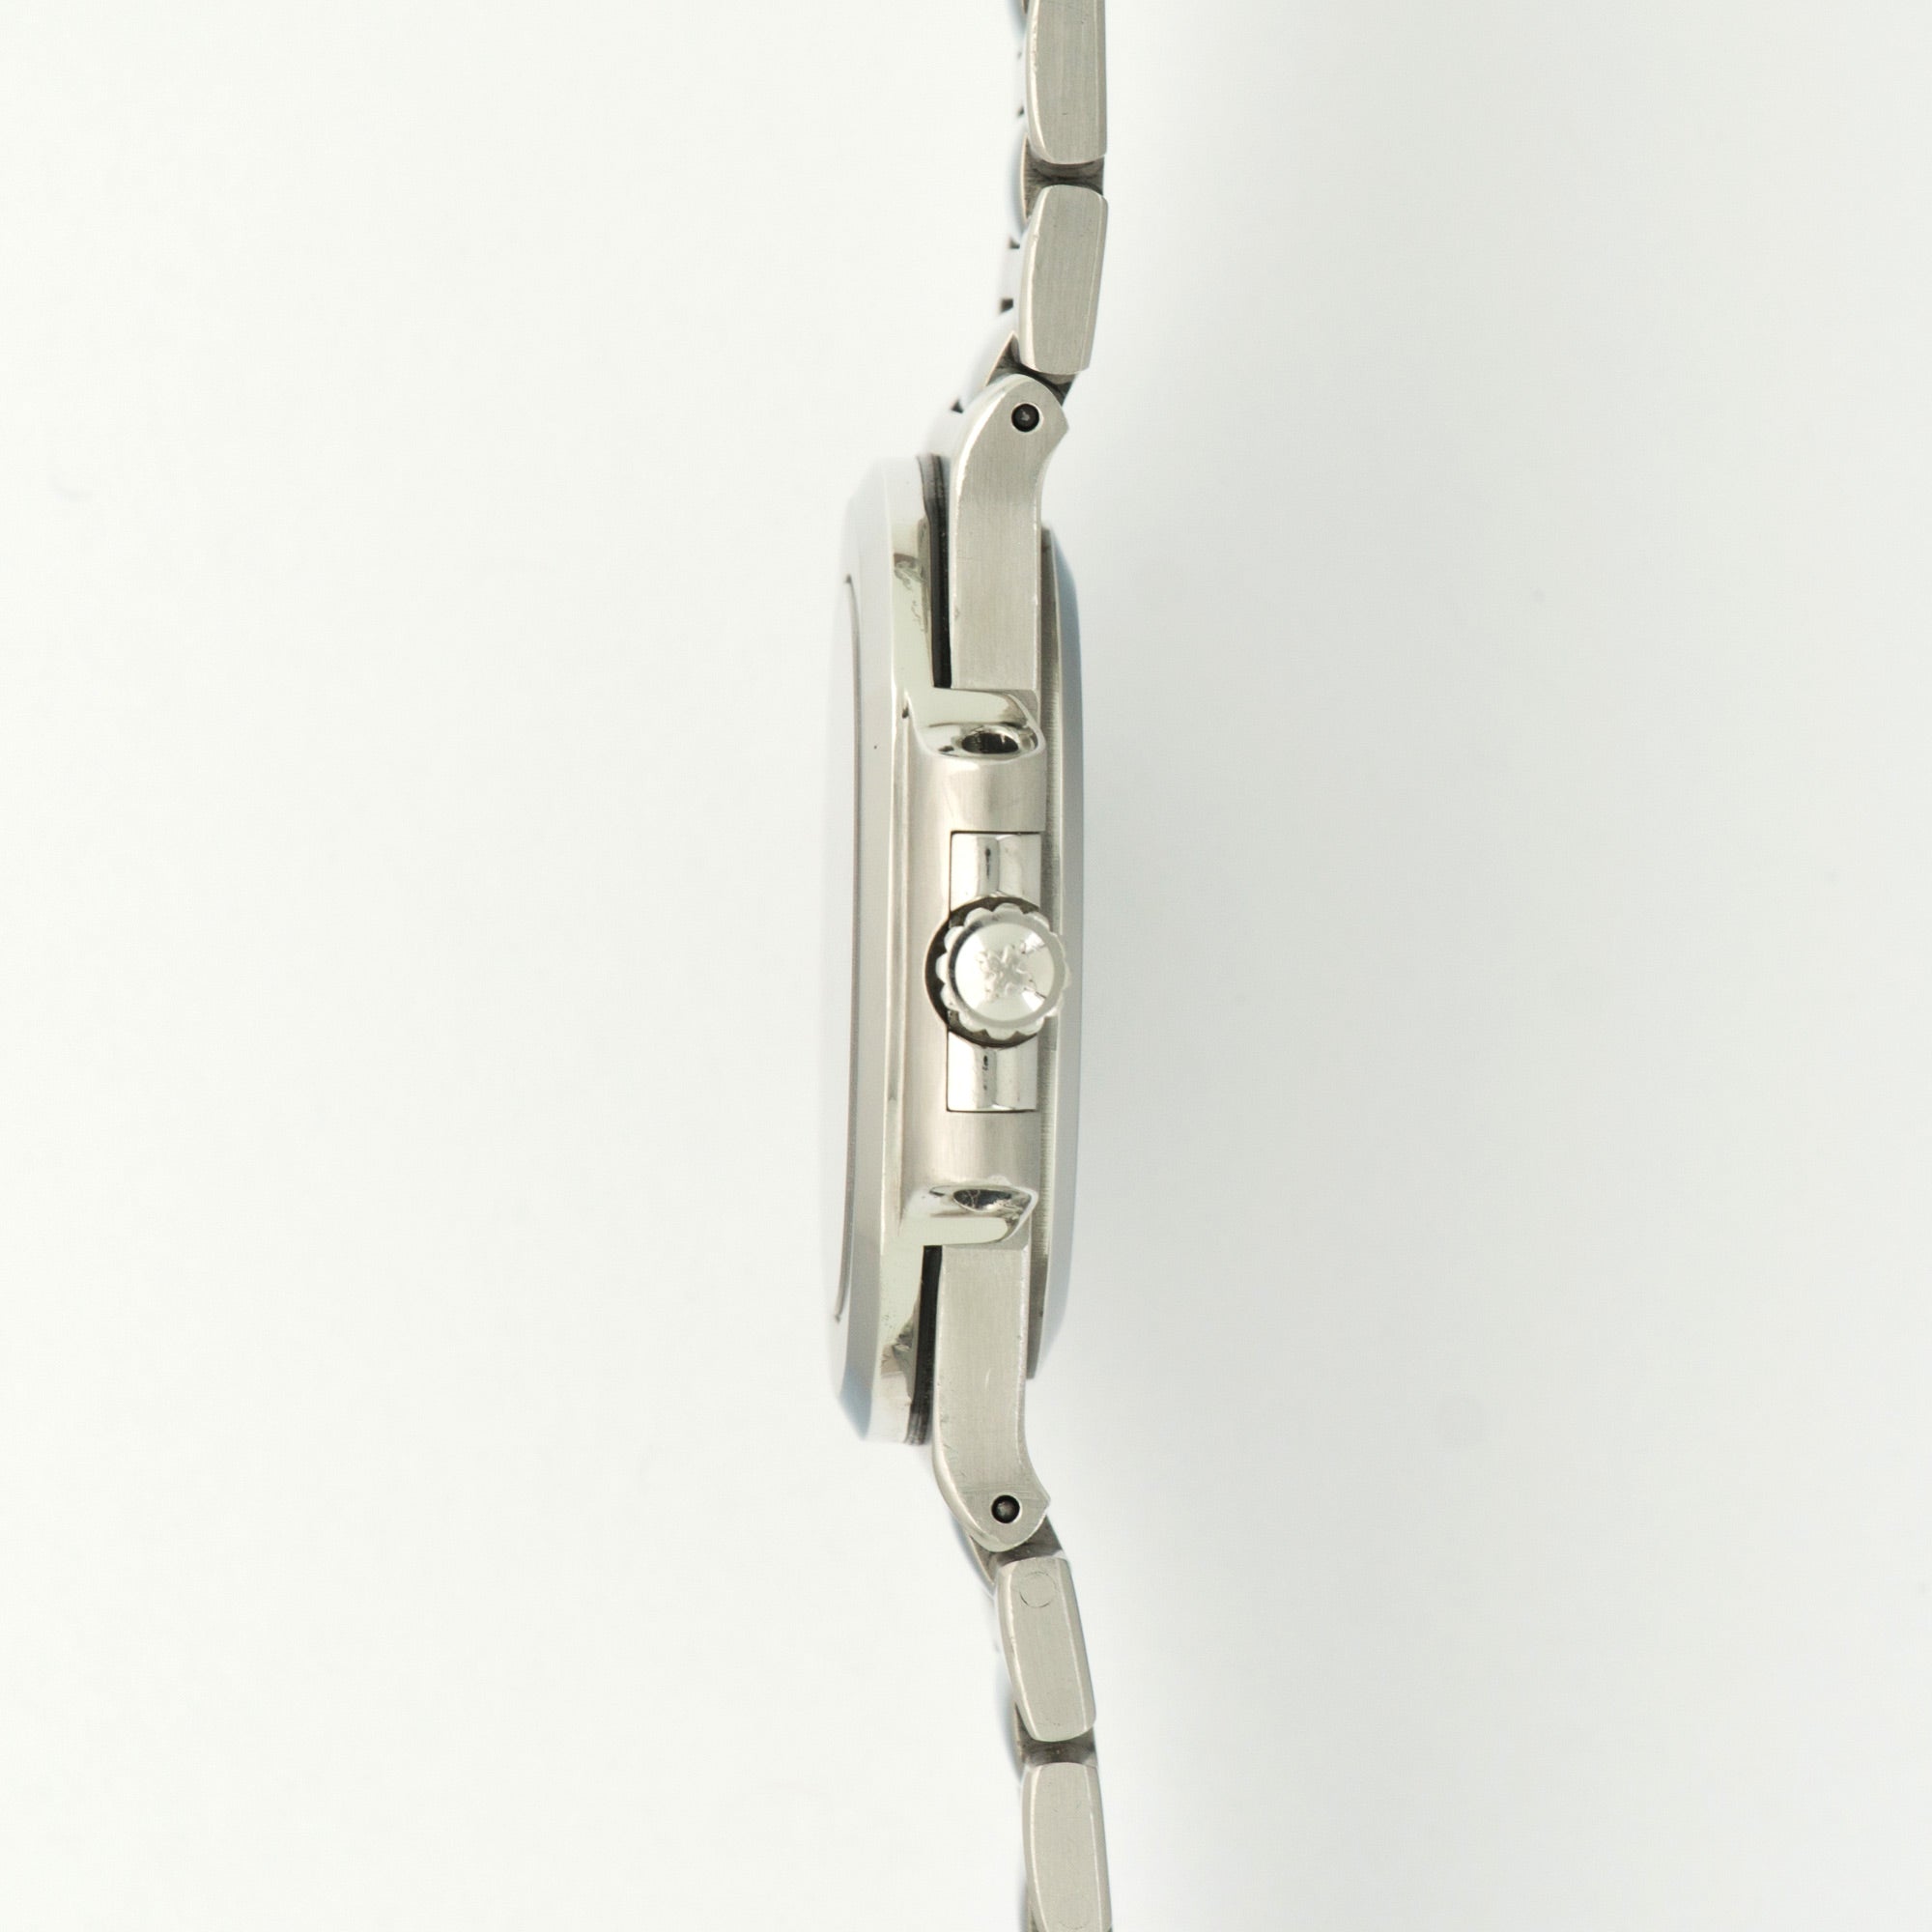 Patek Philippe - Patek Philippe Steel Nautilus Watch Ref. 3800 - The Keystone Watches